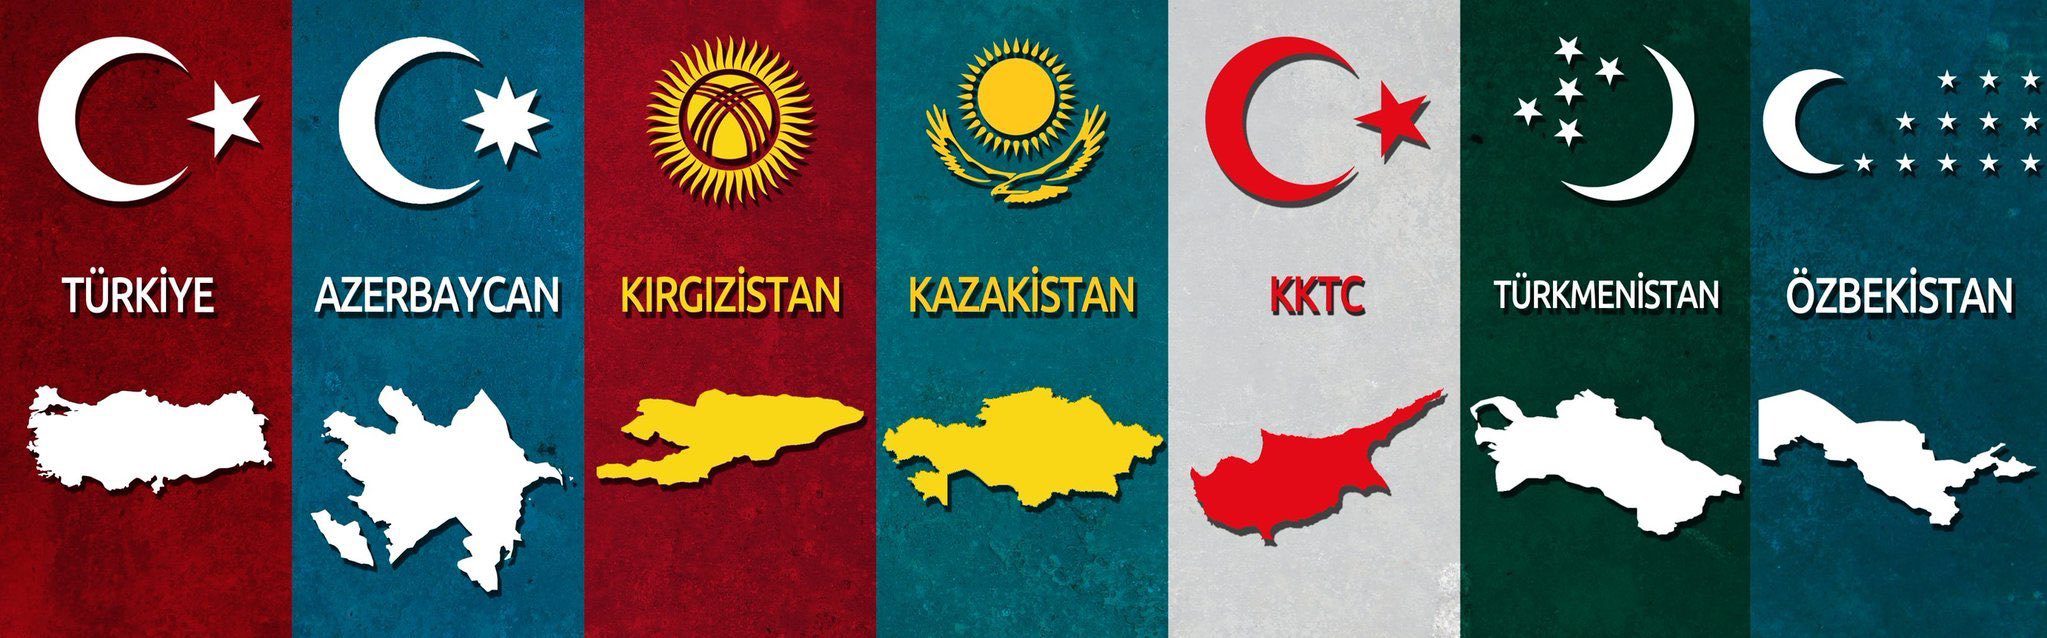 Türk Konseyi